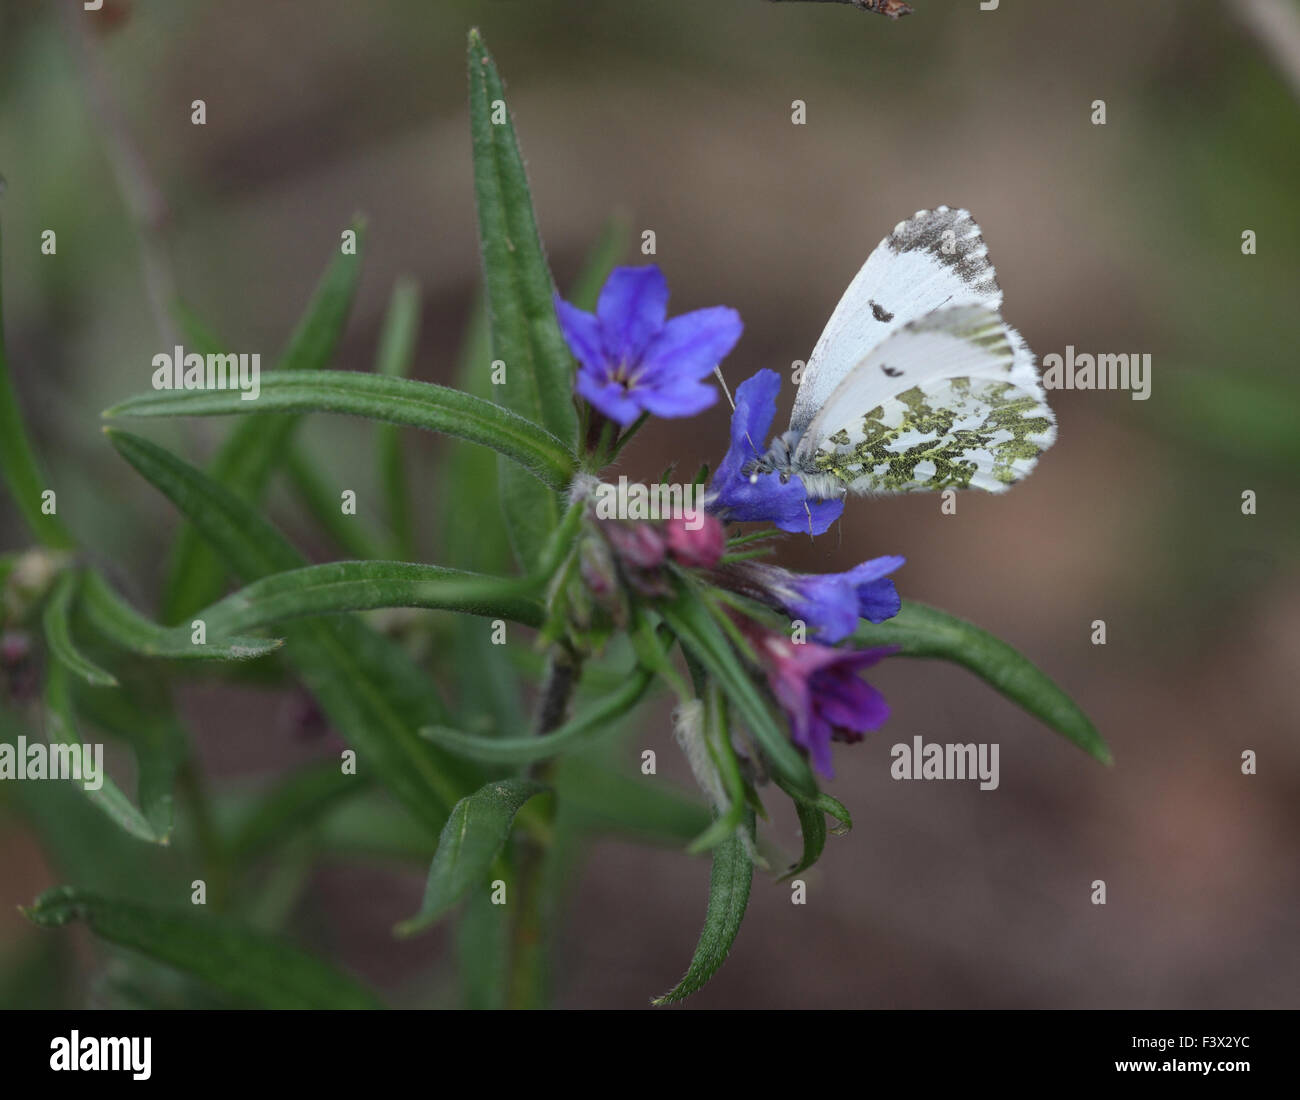 Female taking nectar wings closed Hungary May 2015 Stock Photo